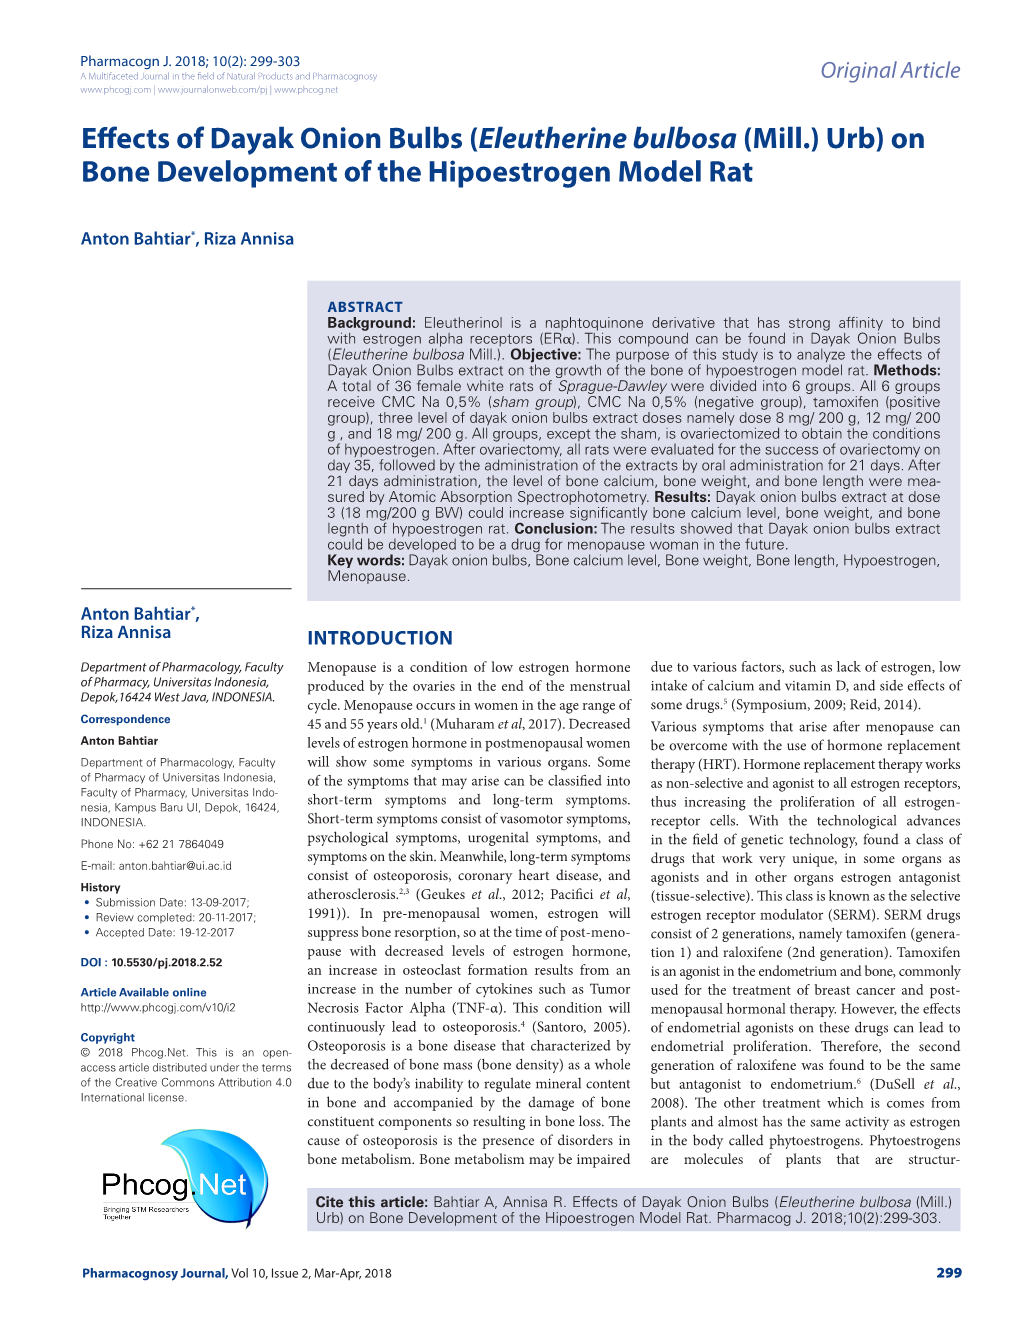 Effects of Dayak Onion Bulbs (Eleutherine Bulbosa (Mill.) Urb) on Bone Development of the Hipoestrogen Model Rat